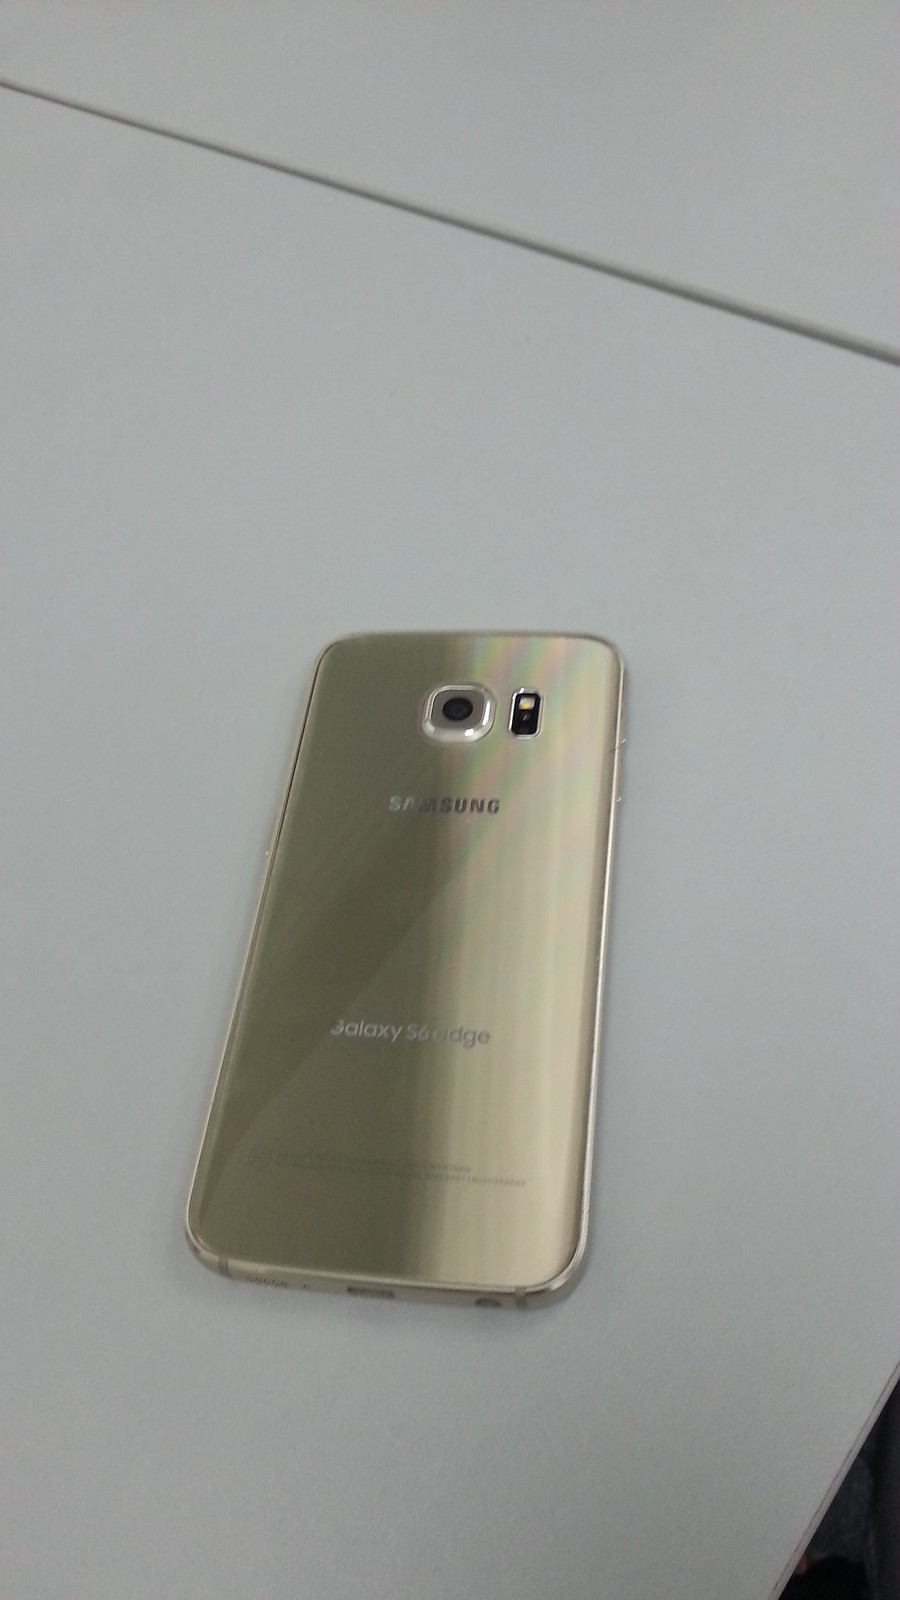 Samsung Galaxy S6 Edge GOLD - 64GB hàng QT MỸ 99% full box.